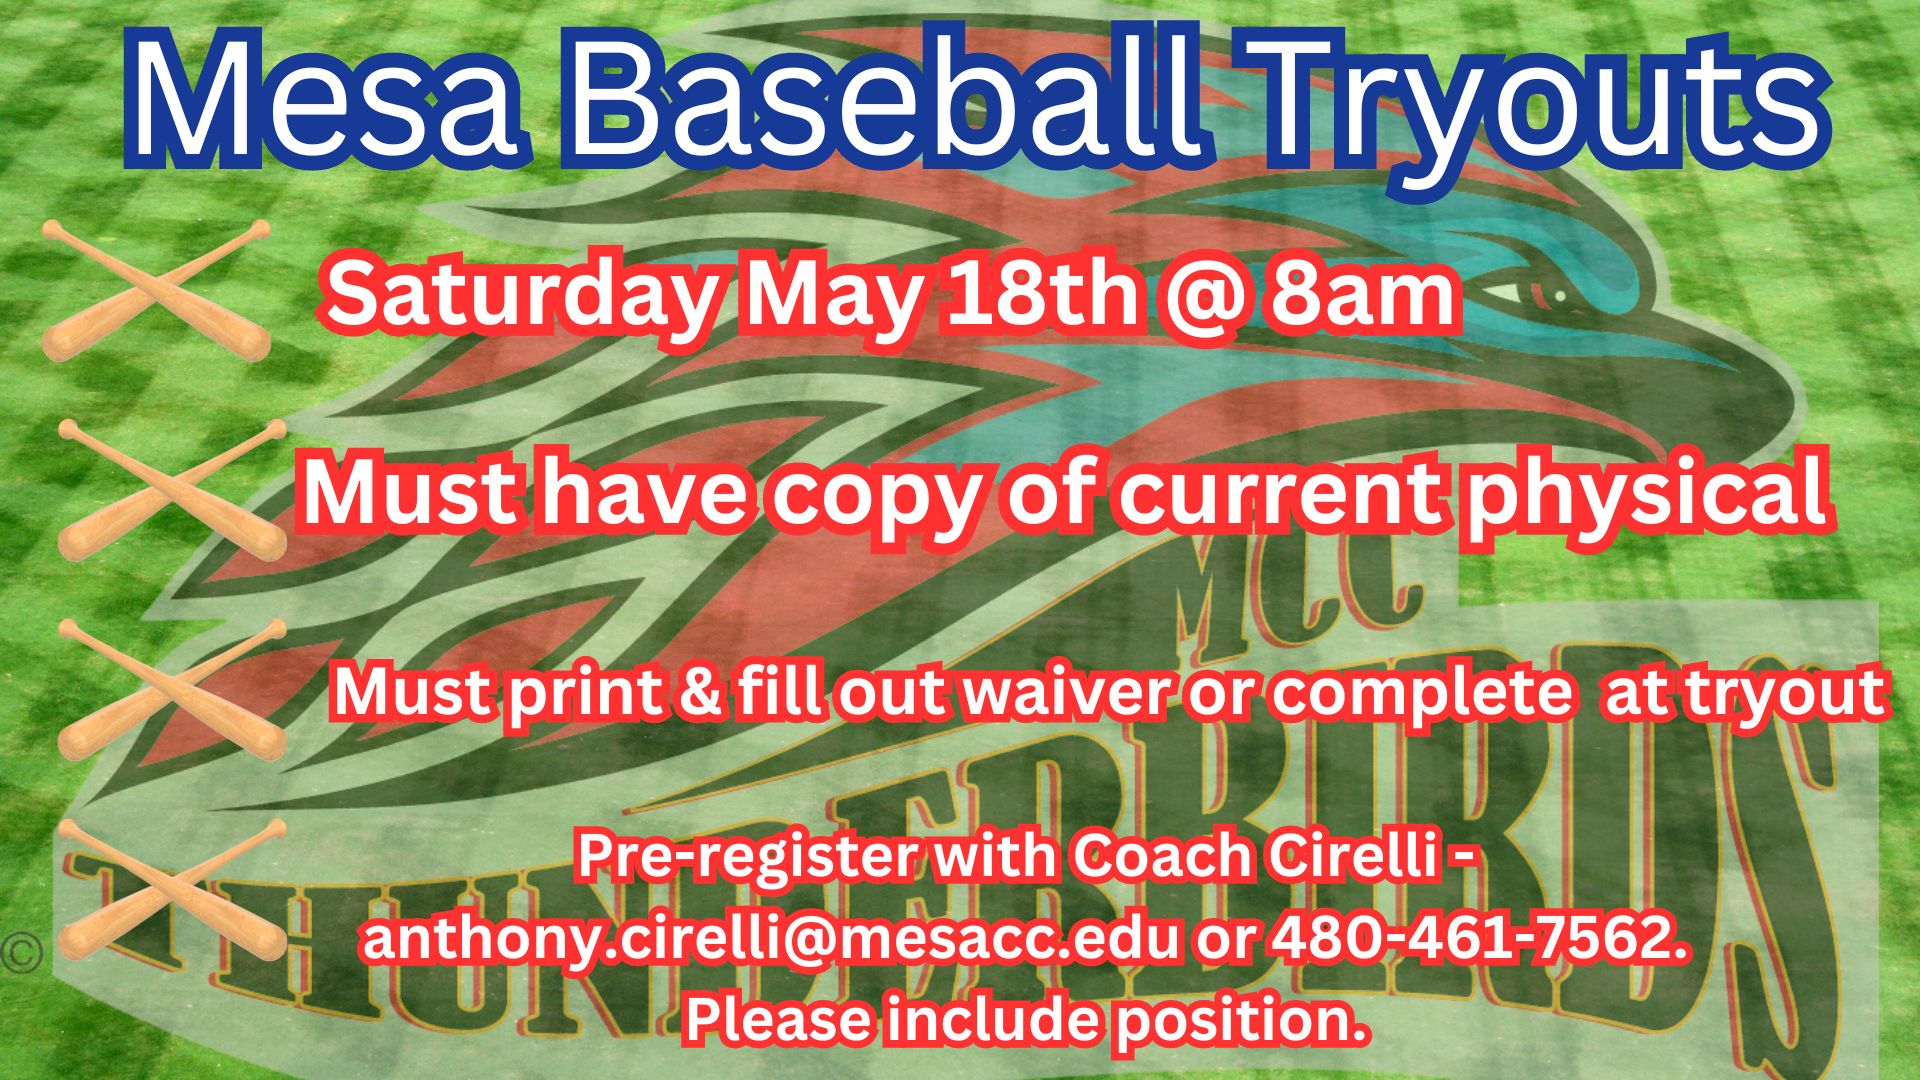 Mesa Baseball to hold tryouts on May 18